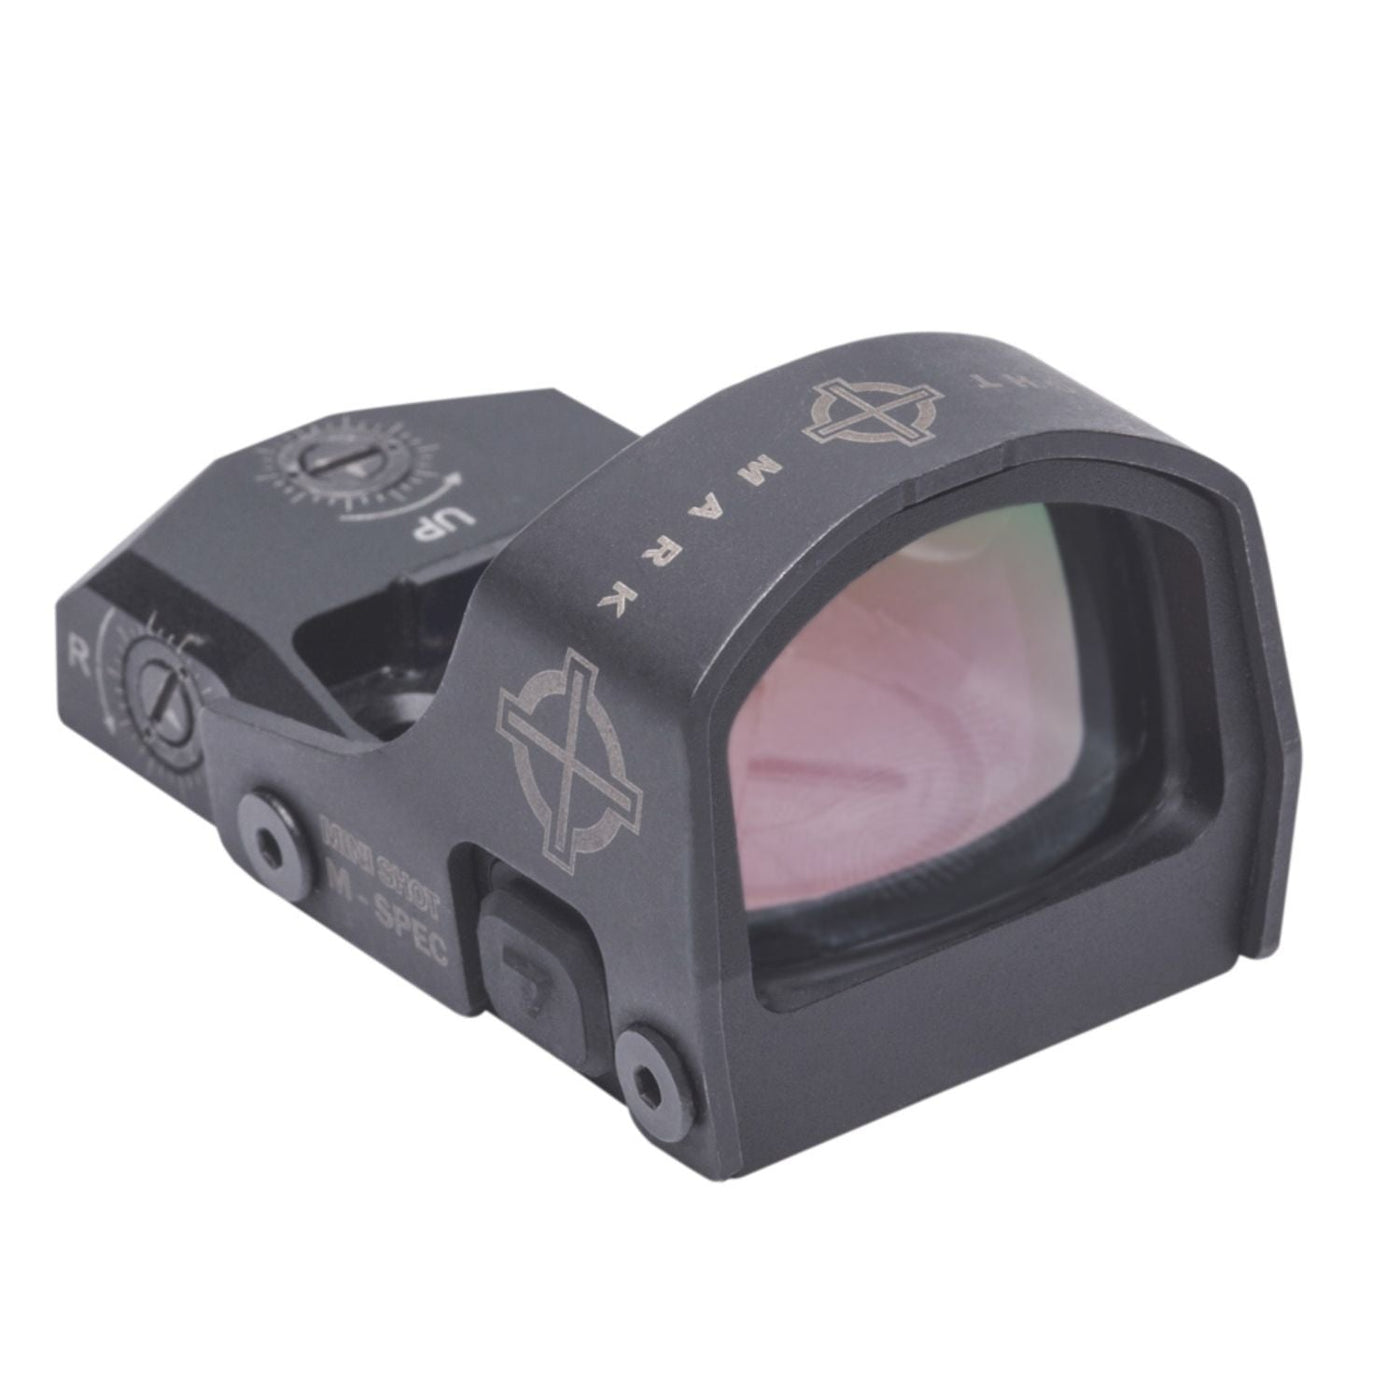 Sightmark Sightmark Mini Shot M-Spec FMS Reflex Sight Optics And Sights